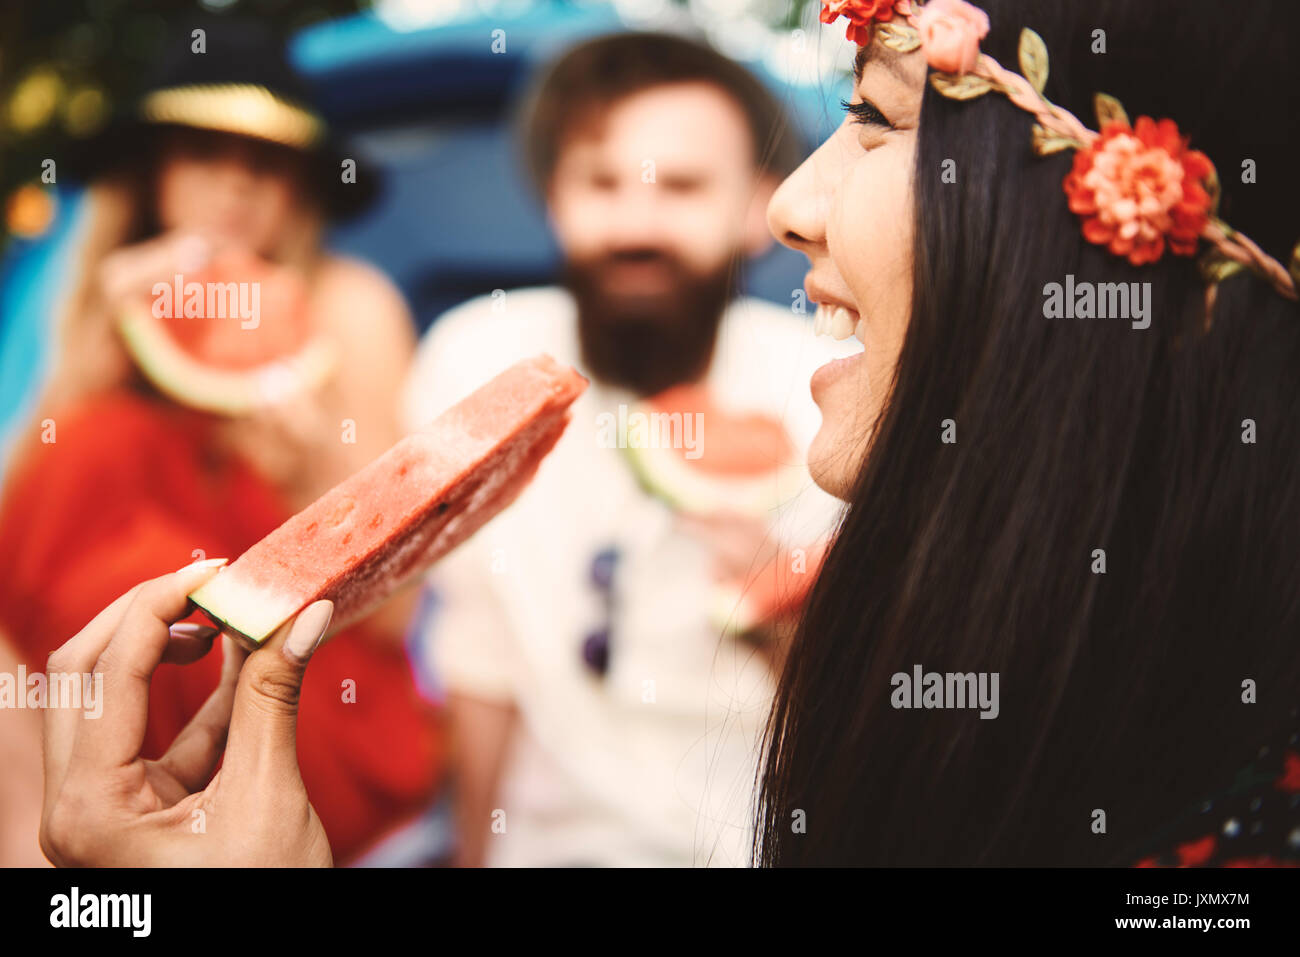 Young boho woman eating melon slice at festival Stock Photo